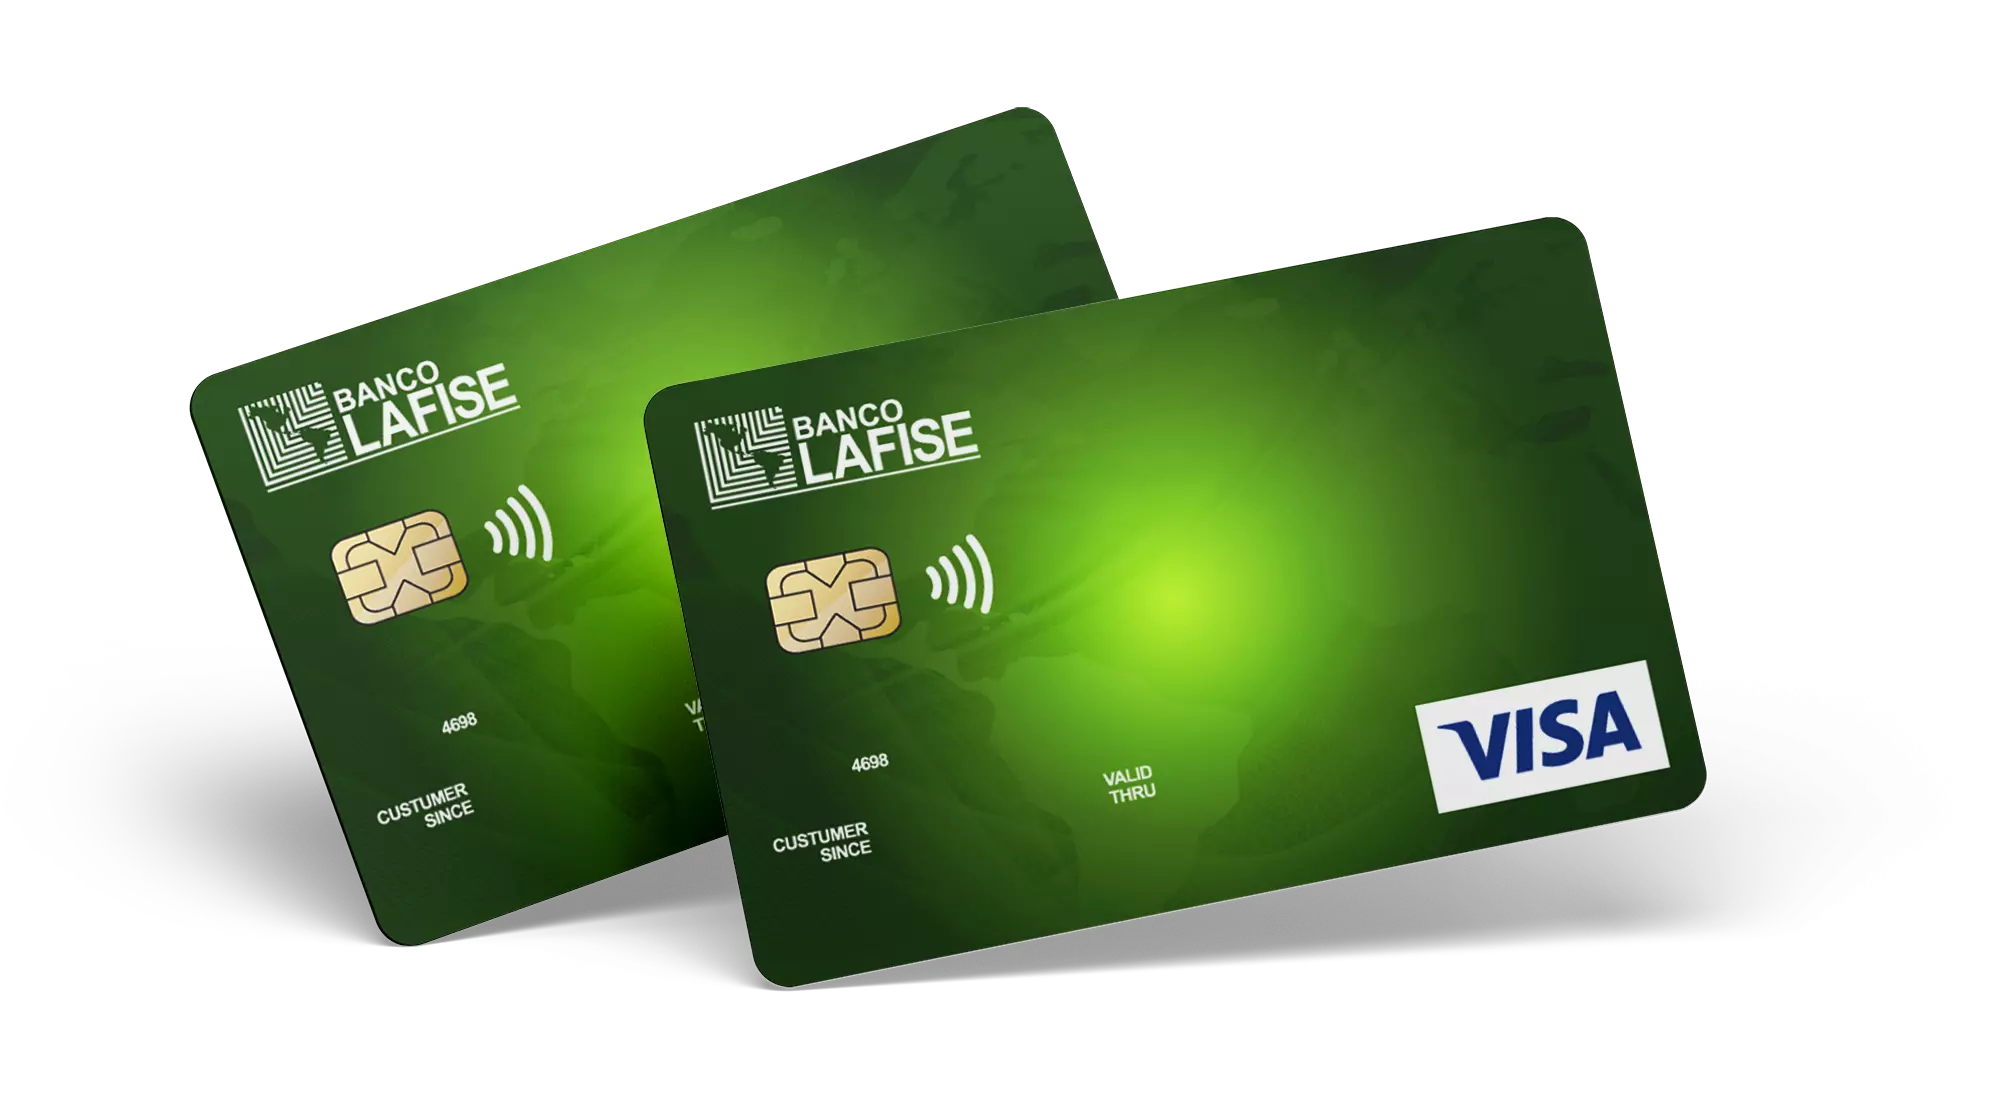 Imagen de dos tarjetas de débito de Banco LAFISE